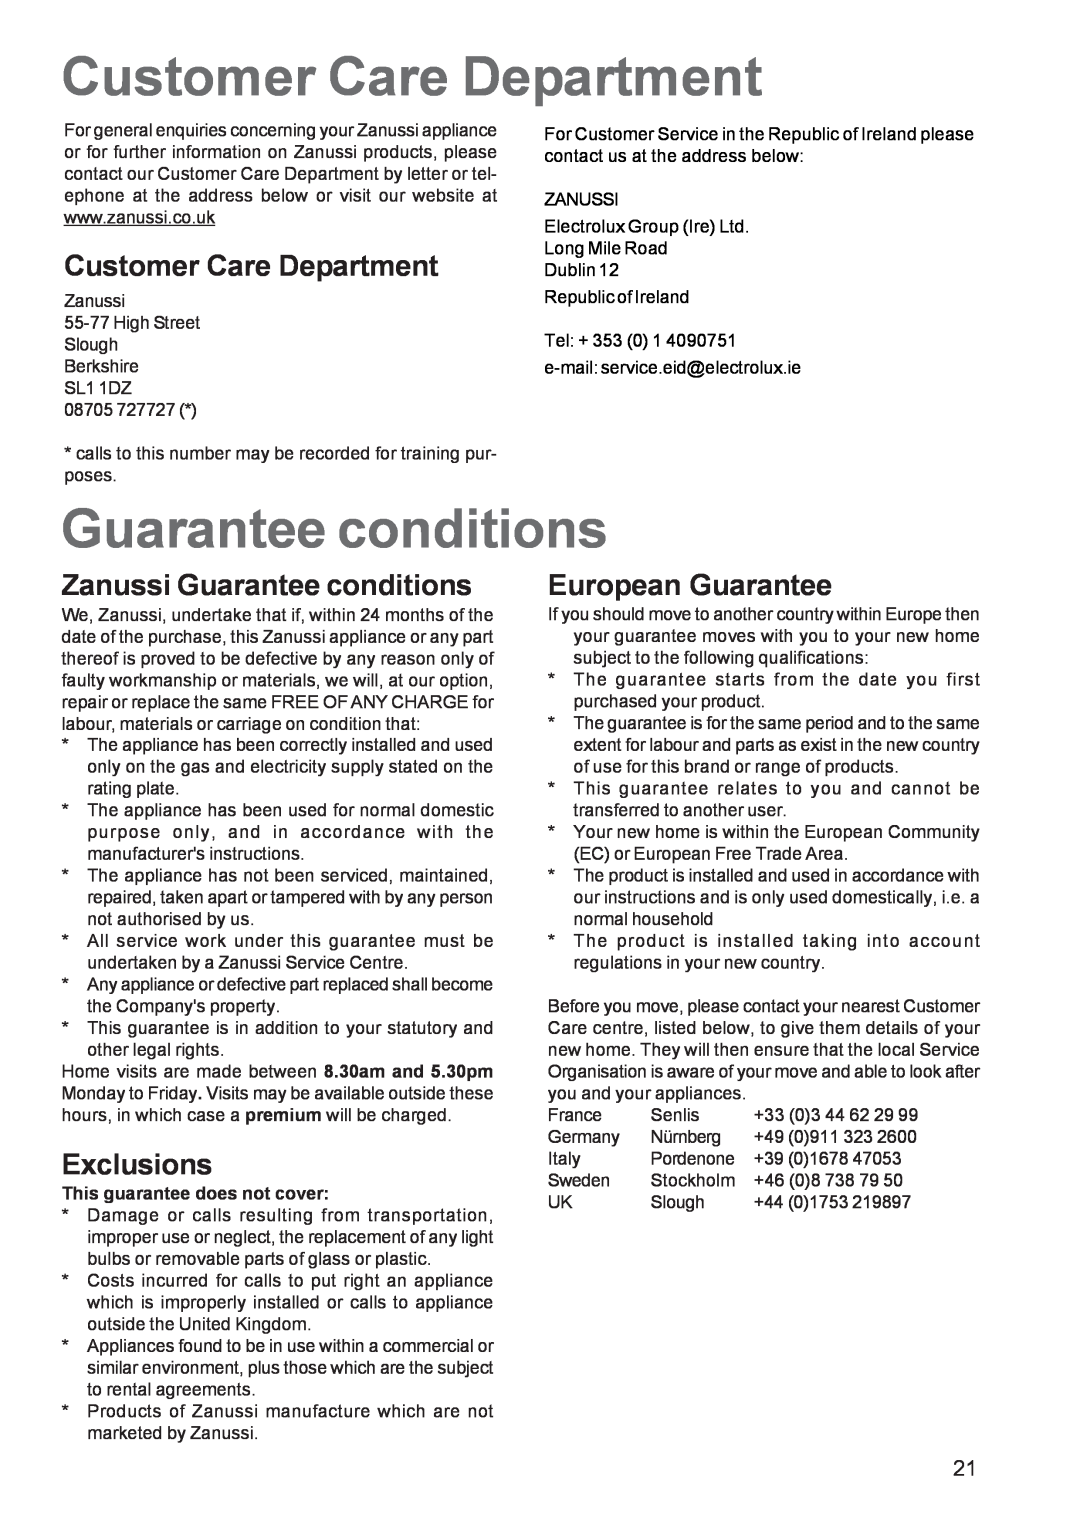 Zanussi ZOB 1060 manual Customer Care Department, Zanussi Guarantee conditions, Exclusions, European Guarantee 